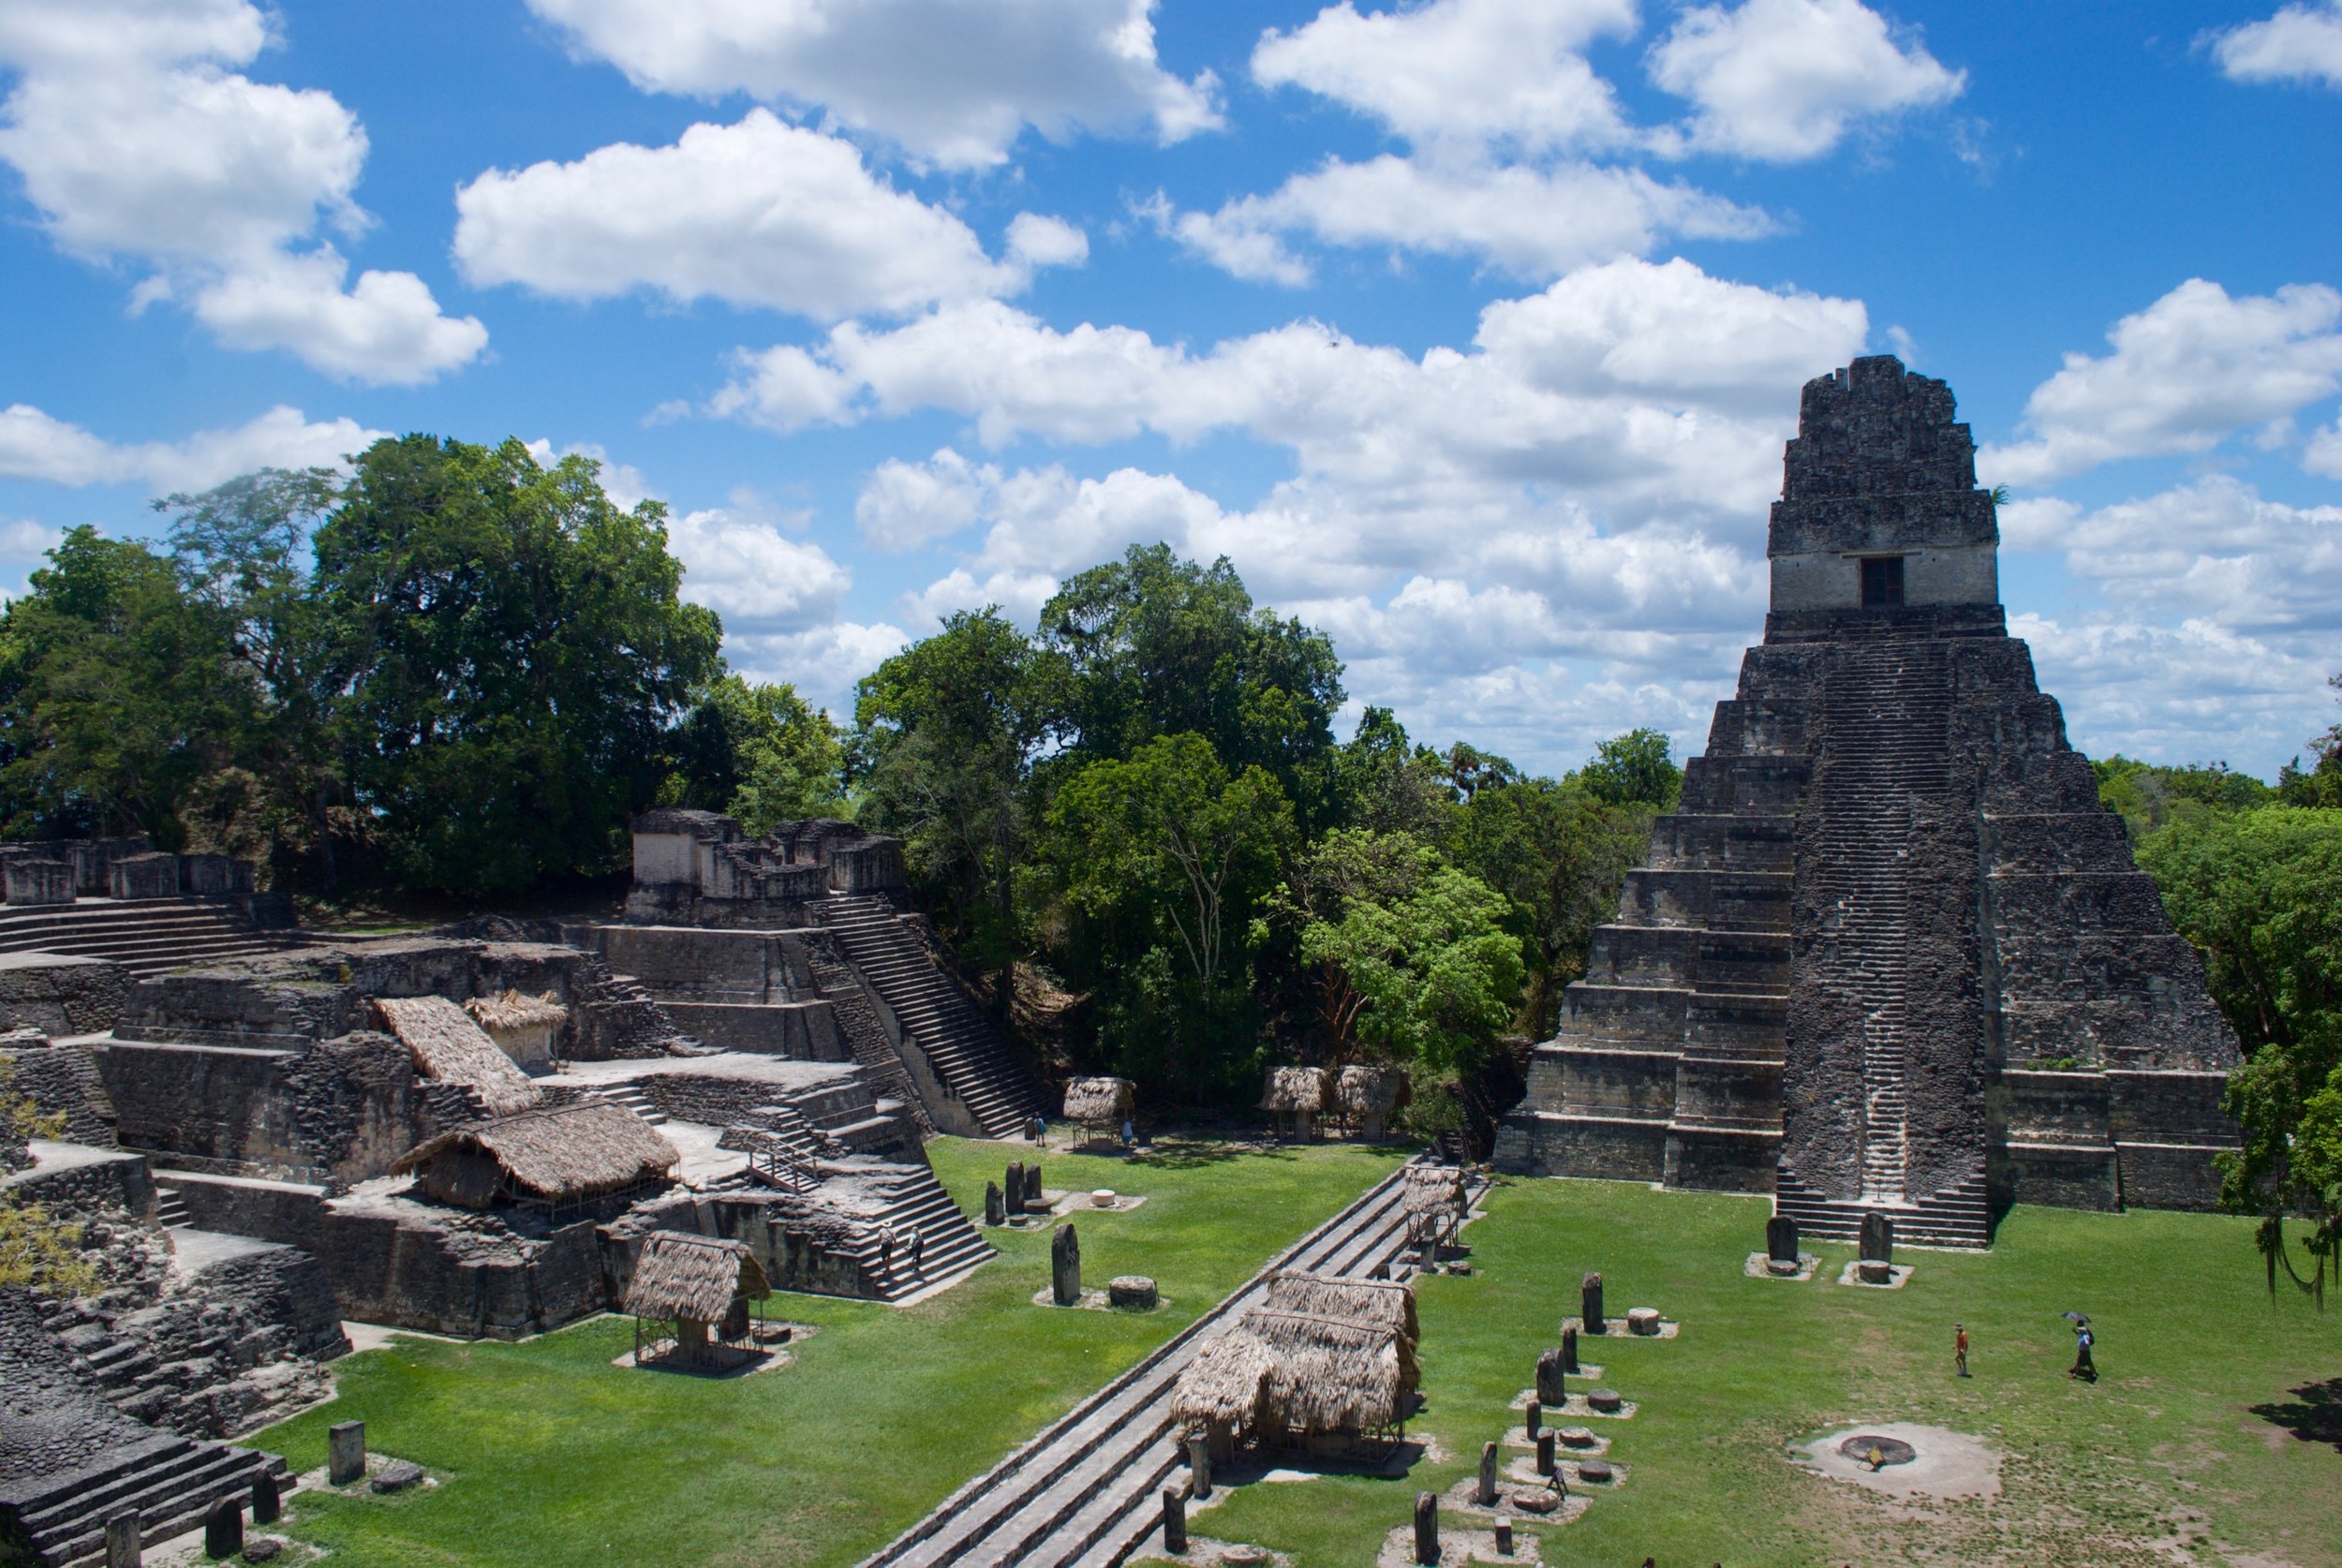 Day 7: Head across the Guatemalan border to visit the extraordinary Tikal National Park